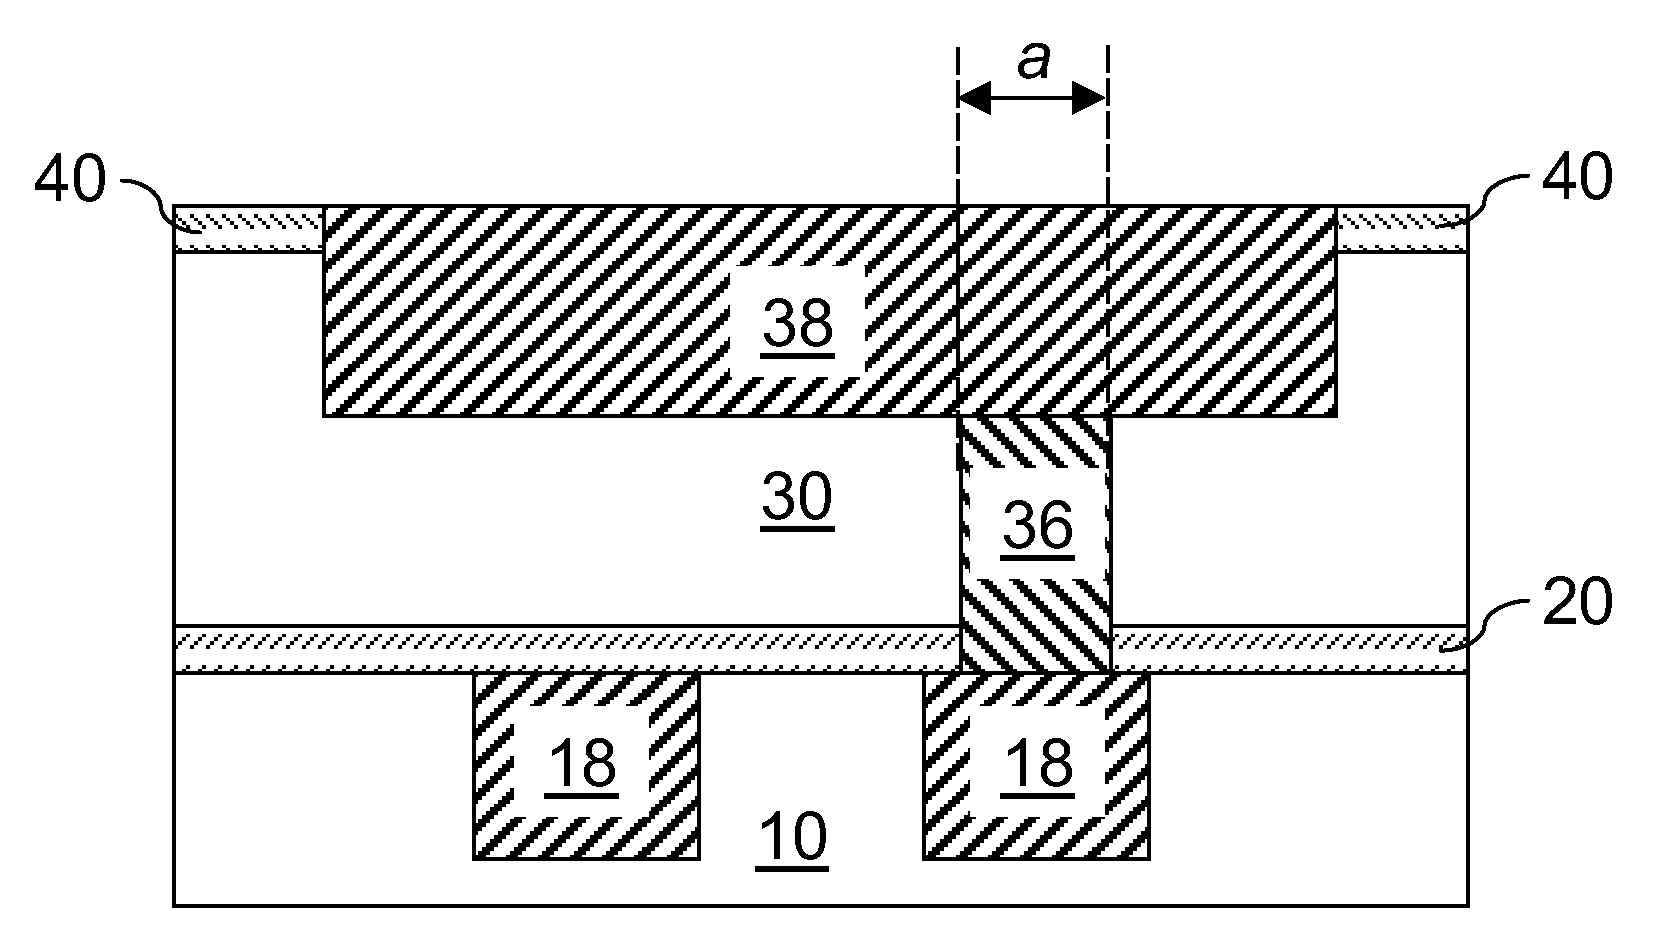 Dual damascene metal interconnect structure having a self-aligned via